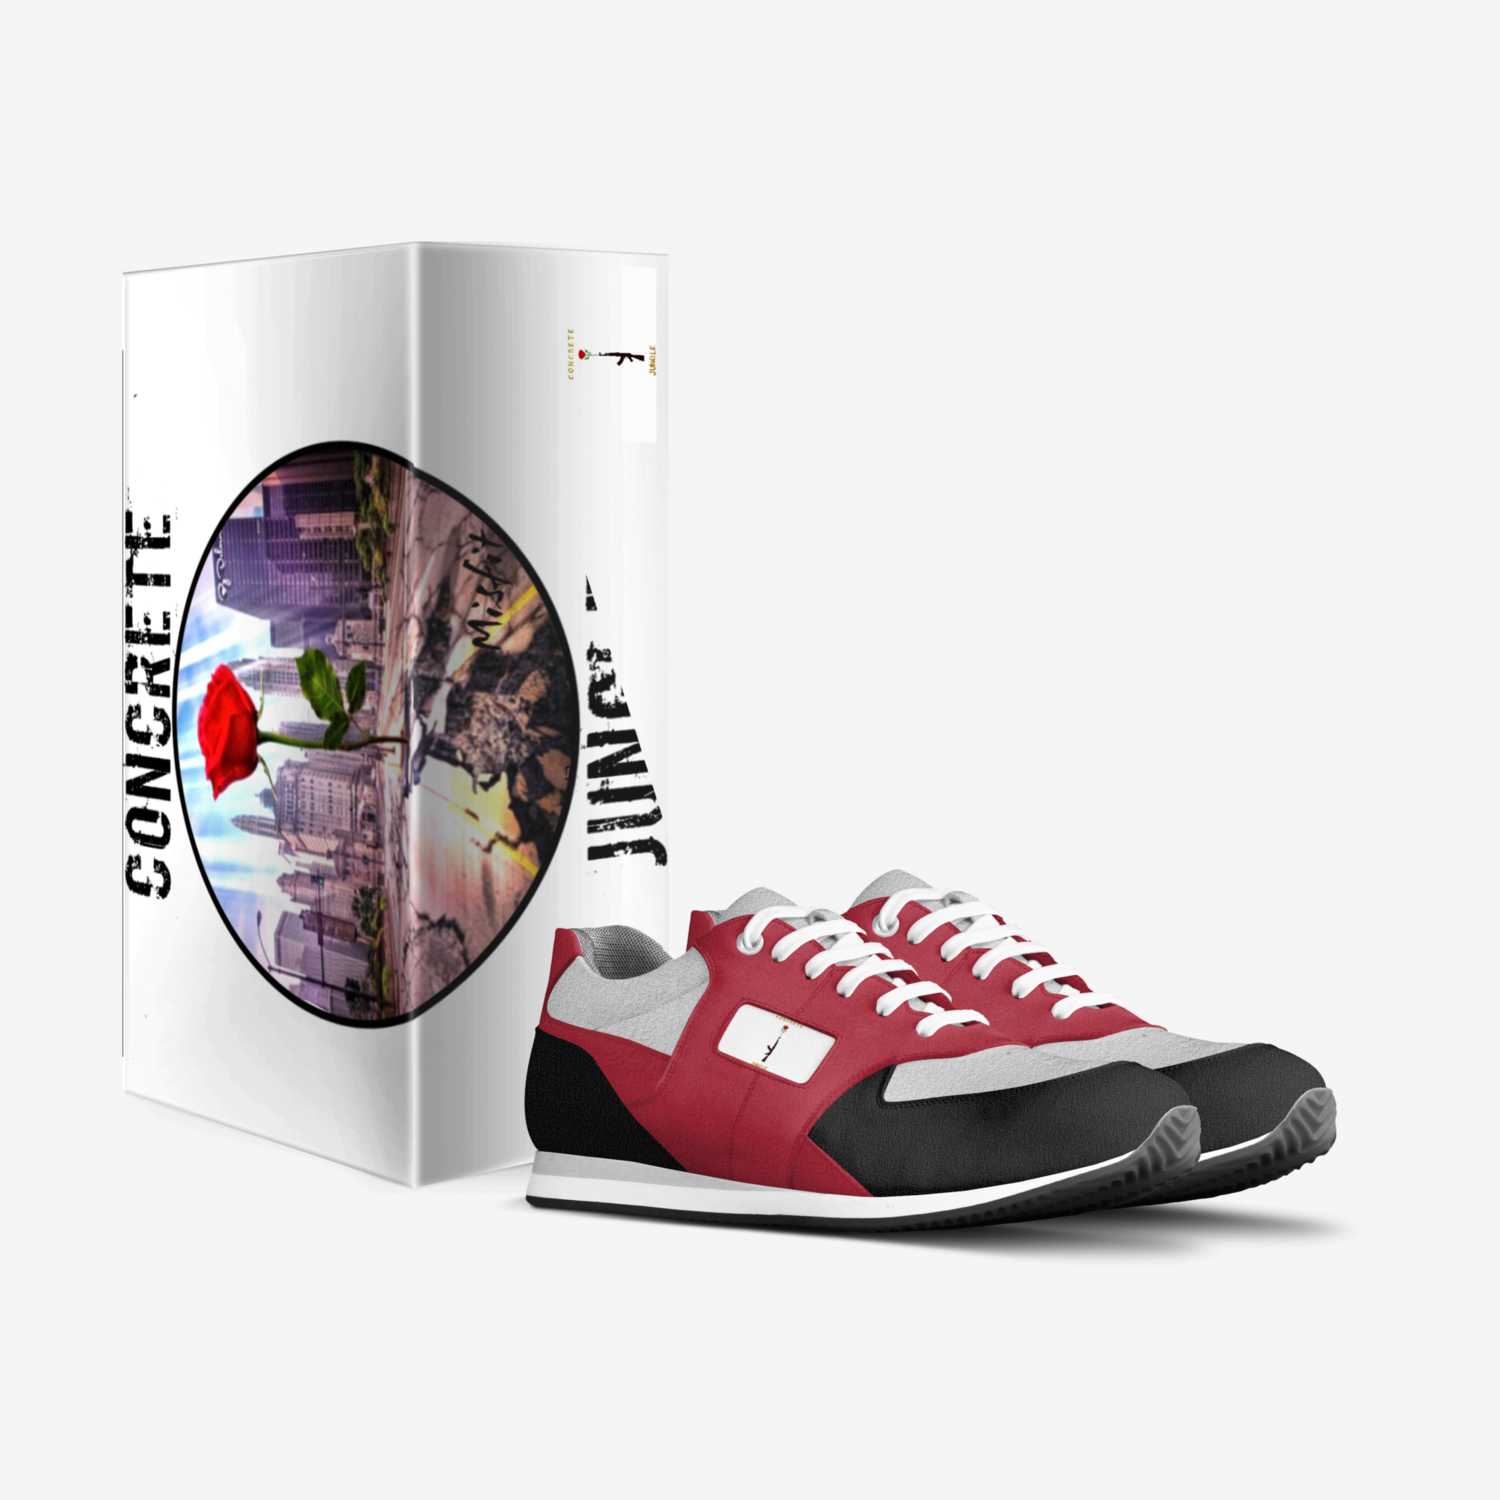 MisfitClothing custom made in Italy shoes by Gabryella M. Romero | Box view